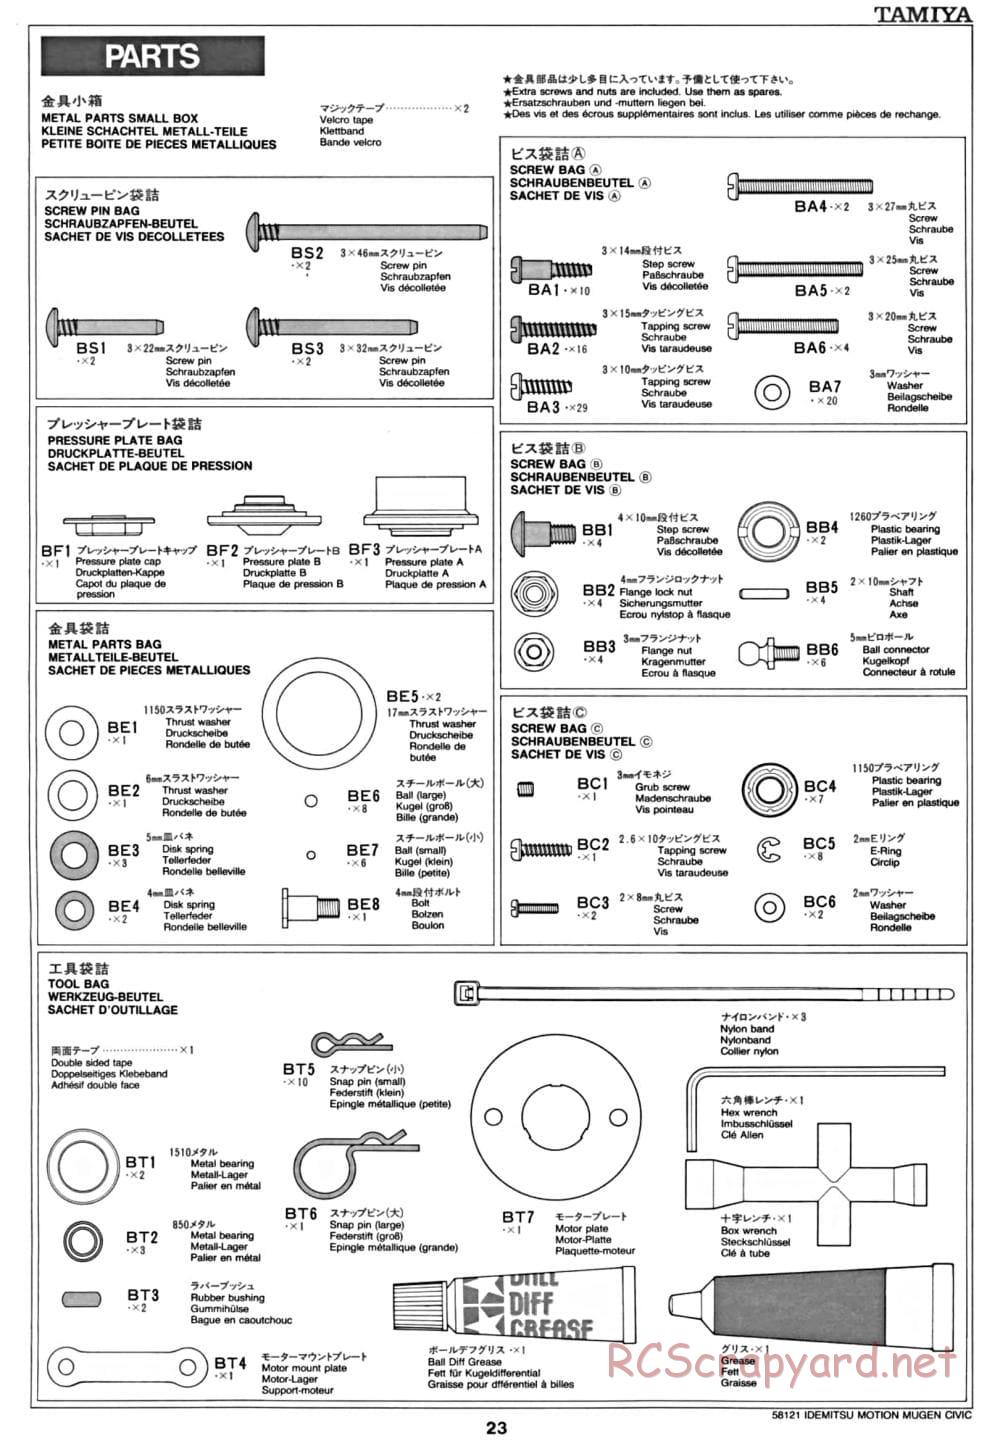 Tamiya - Idemitsu Motion Mugen Civic - FF-01 Chassis - Manual - Page 23